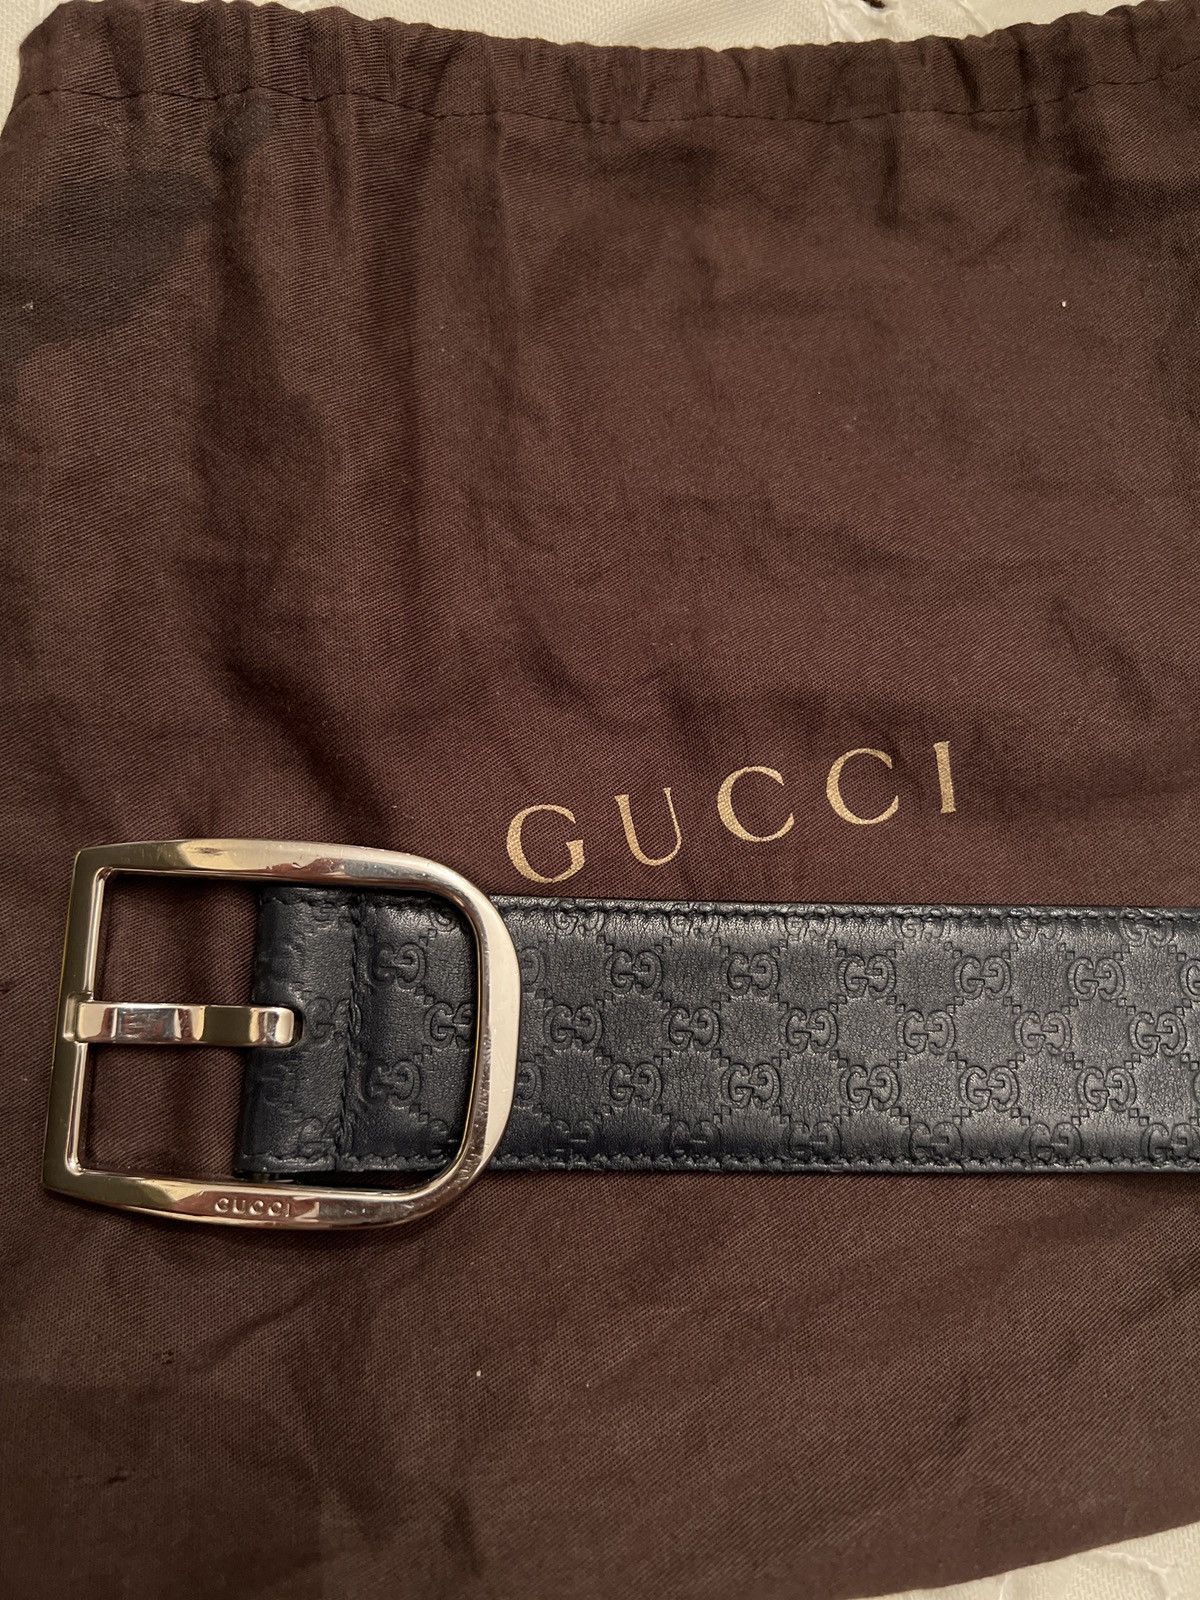 Gucci Gucci Guccissima Leather Belt Size 34 - 2 Preview